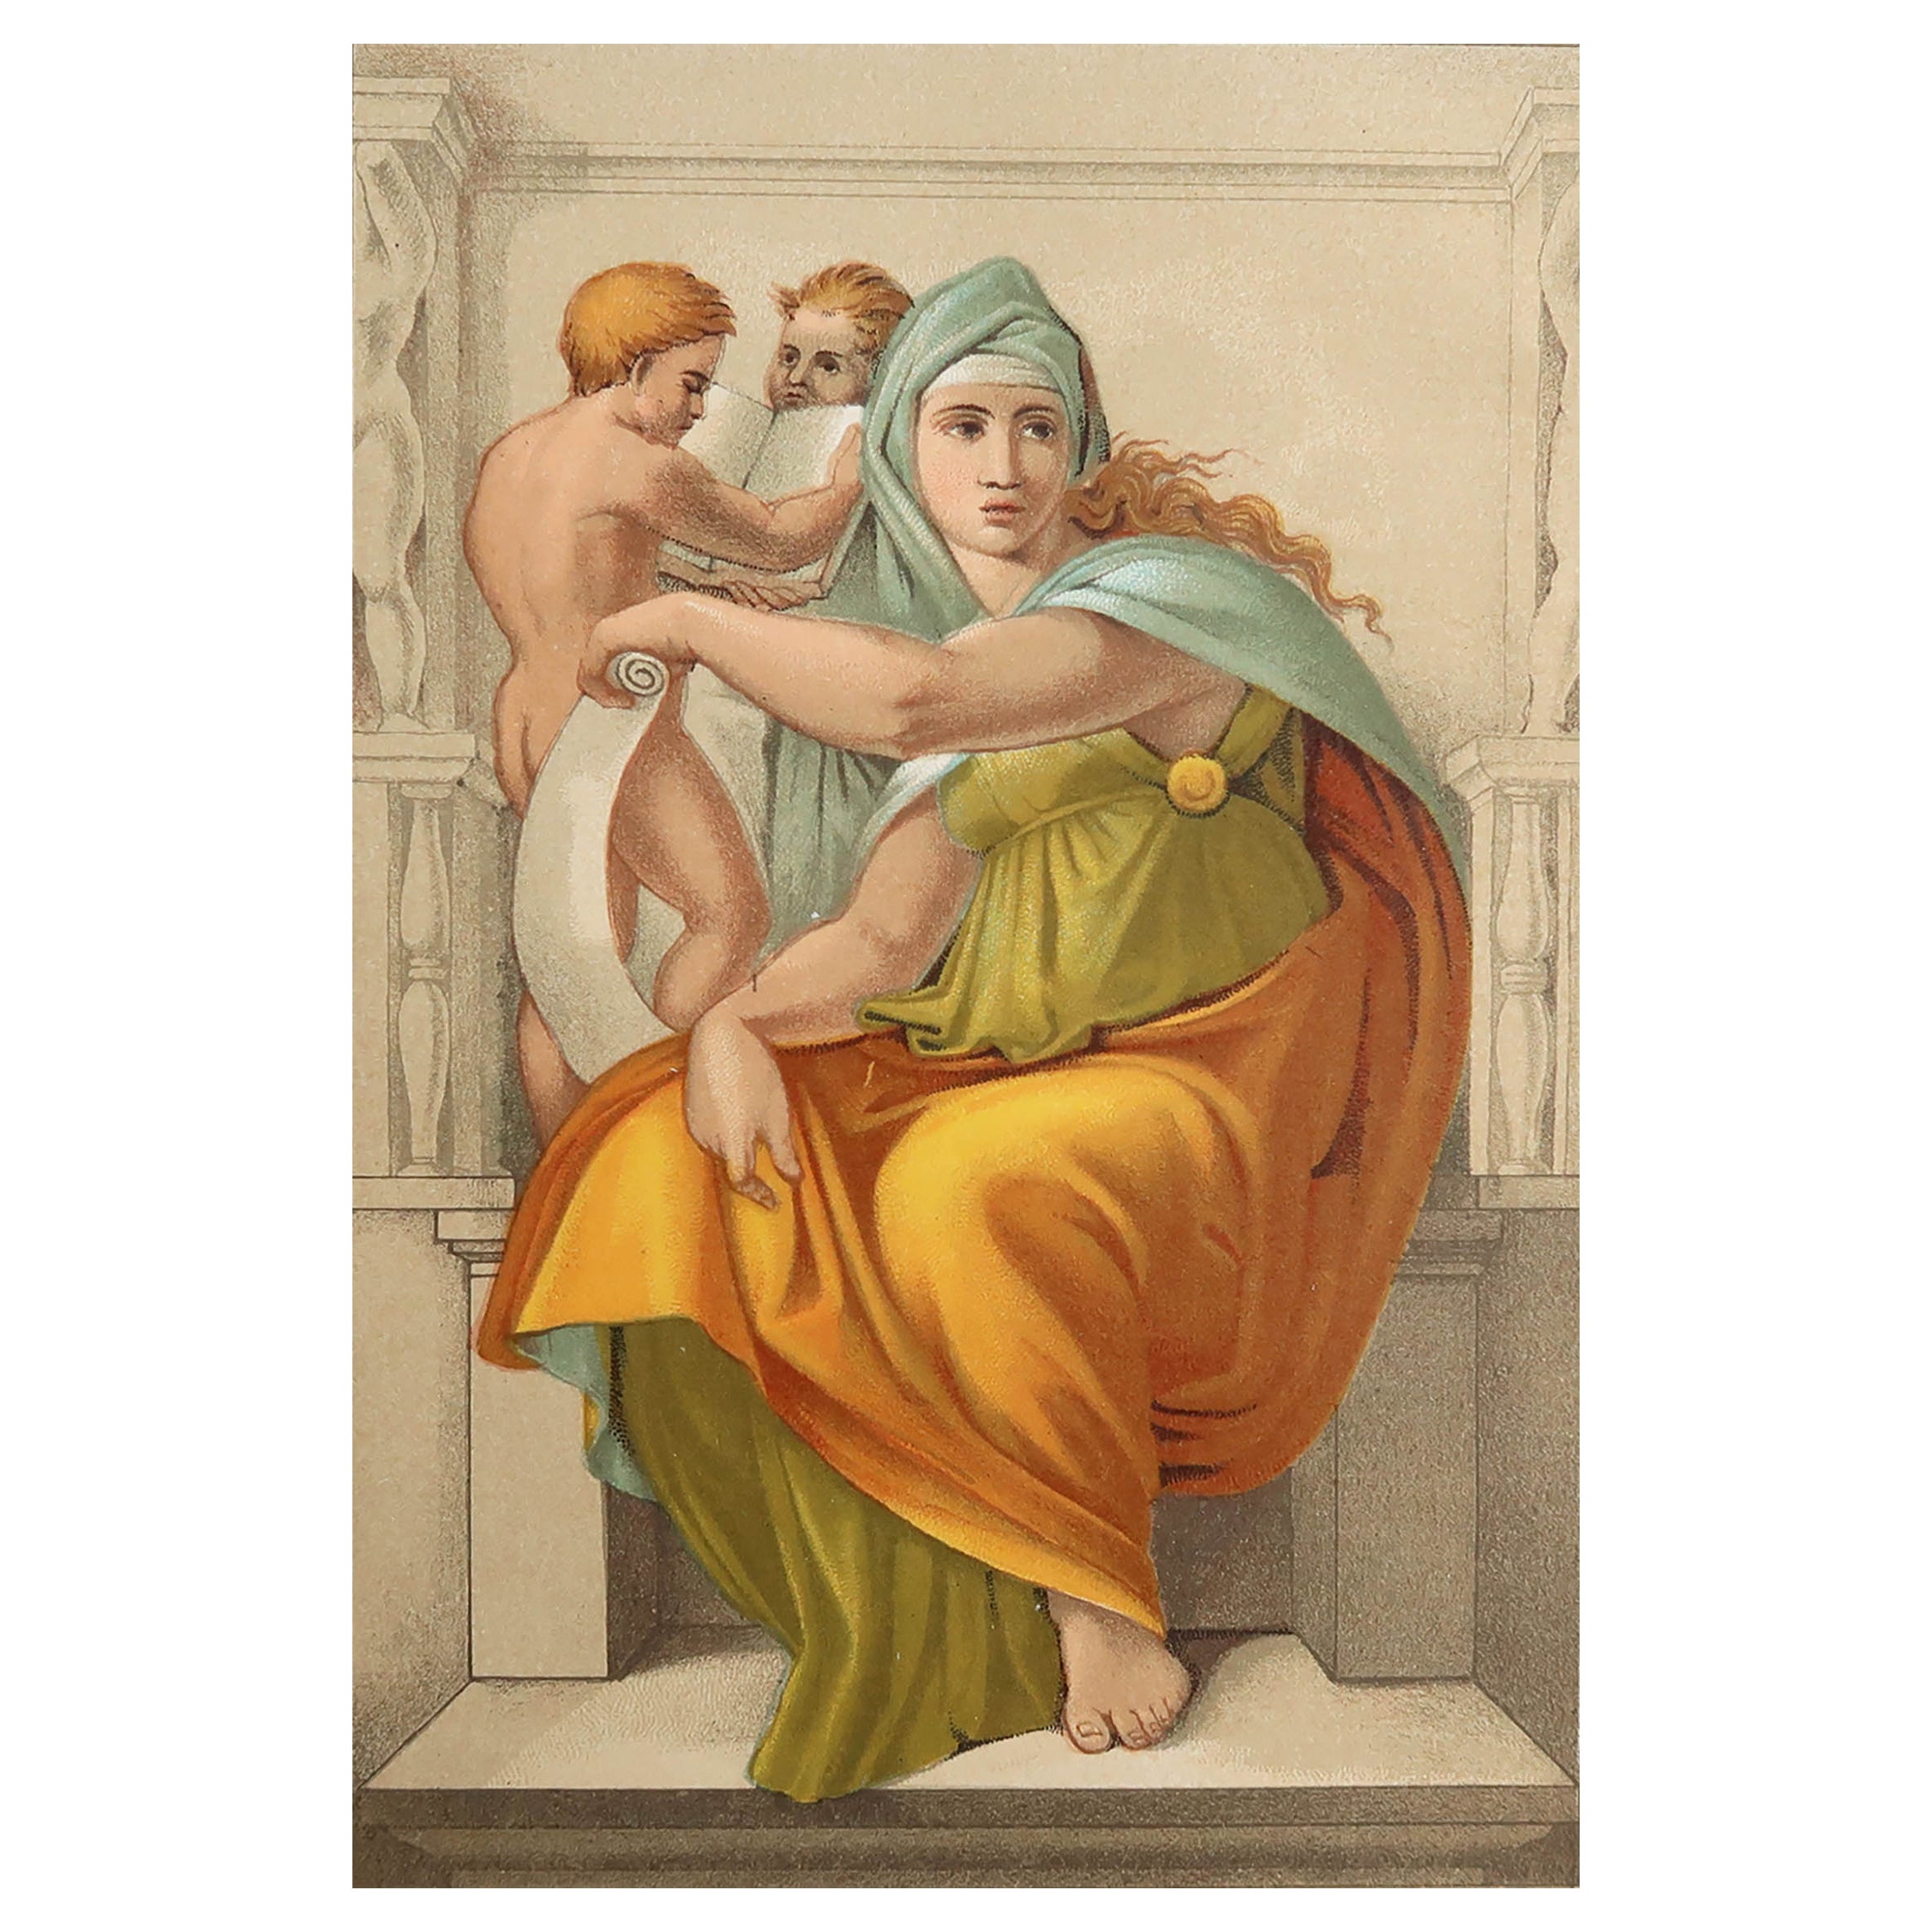   Original Antique Print of a Fresco By Michelangelo, C.1880 For Sale